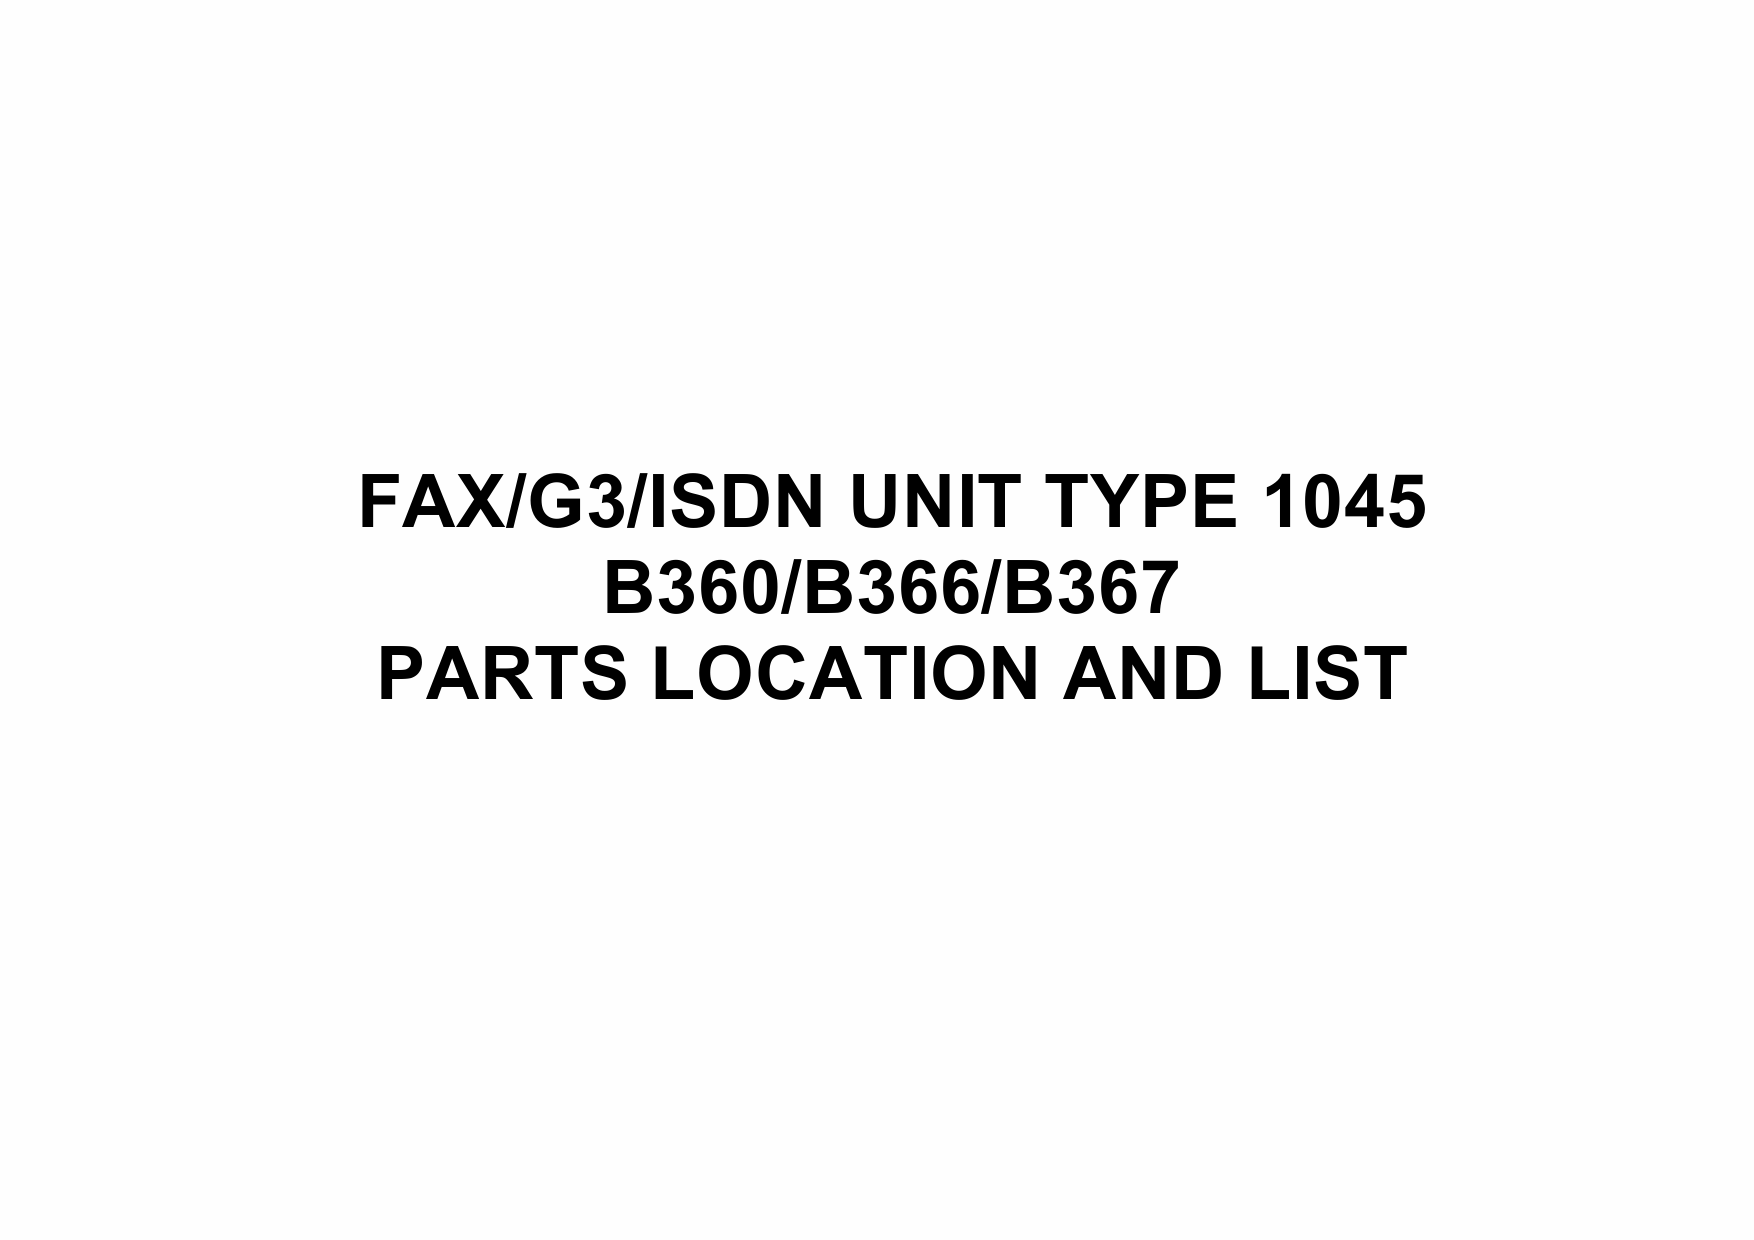 RICOH Options B360 B366 B367 FAX-G3-ISDN-UNIT Parts Catalog PDF download-1